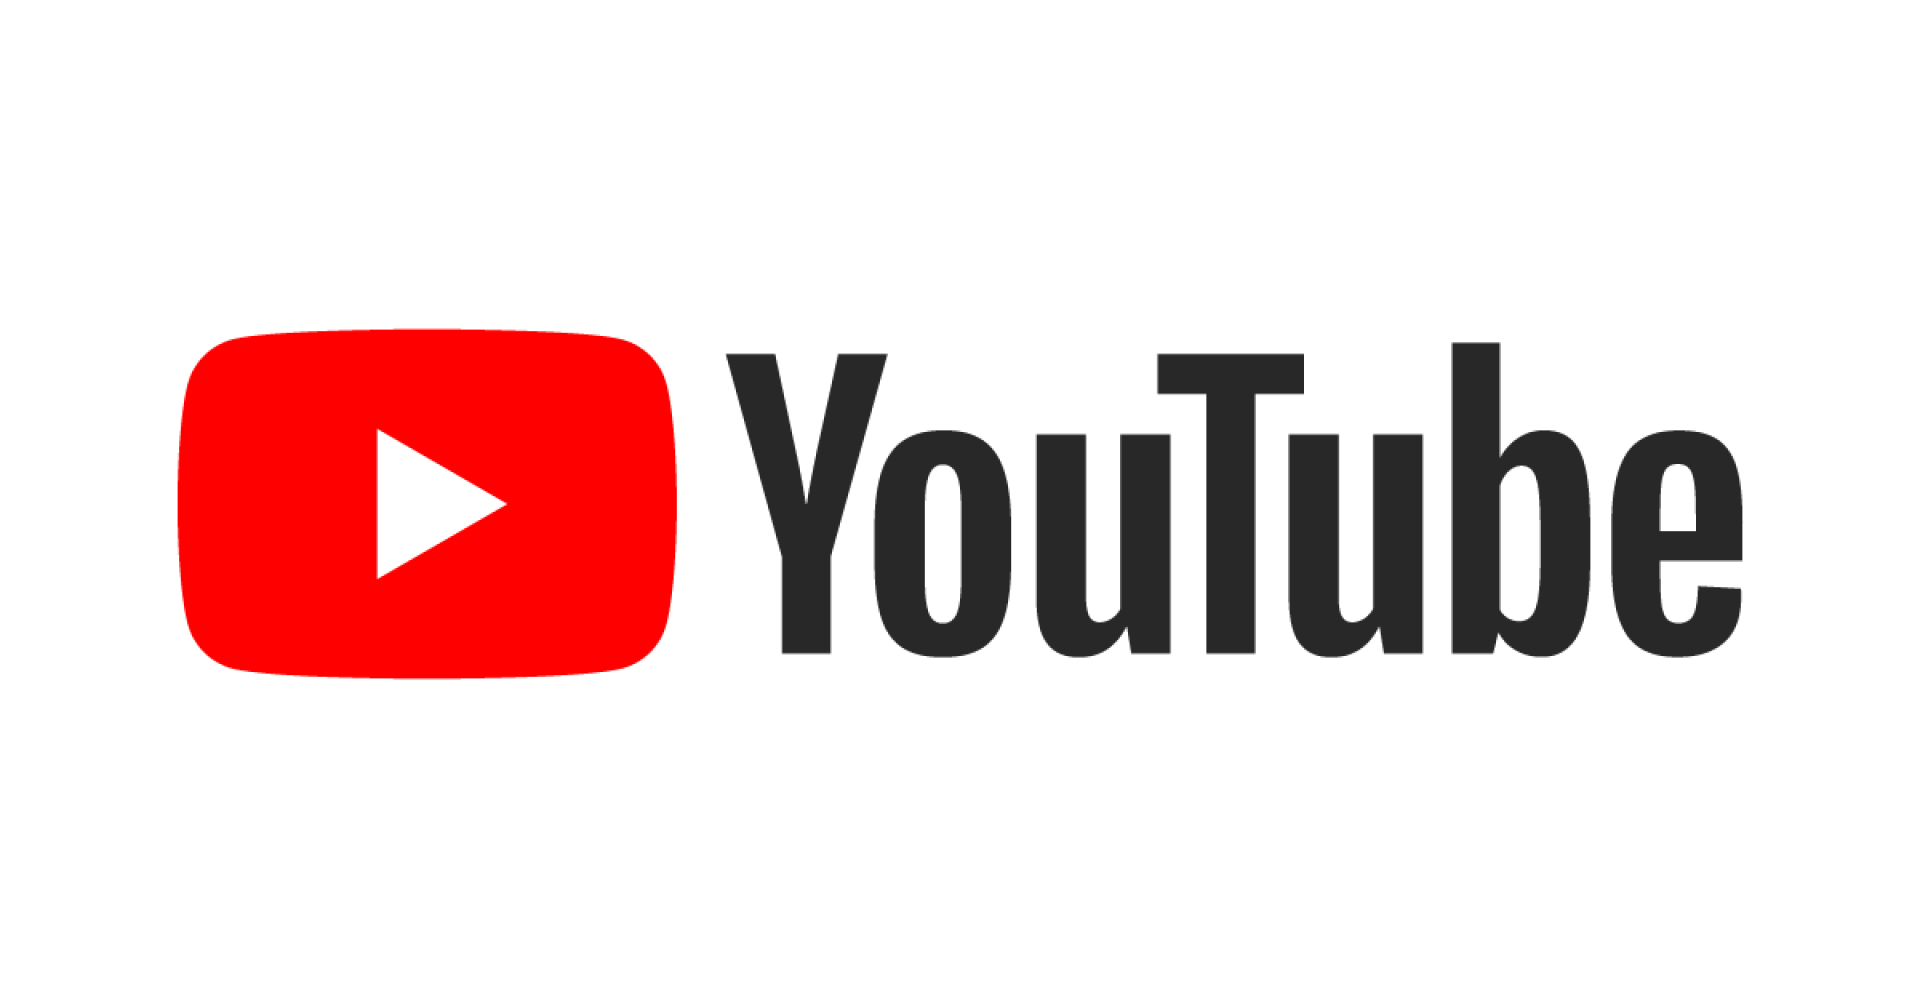 YouTube เตรียมเพิ่มแพ็กเกจ Premium เพิ่มเติม